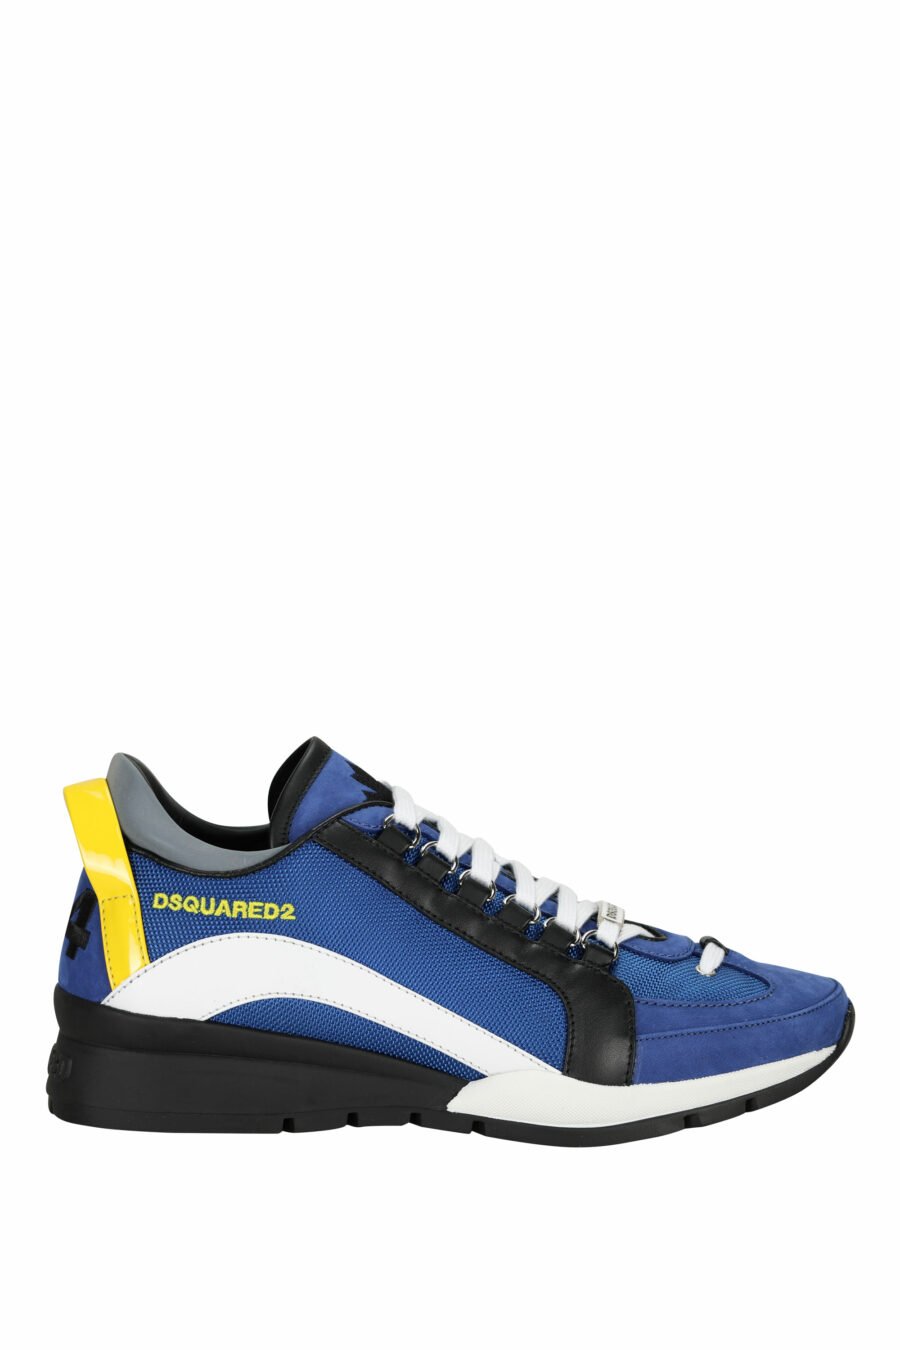 Zapatillas azules "legendary" con detalle amarillo - 8055777300343